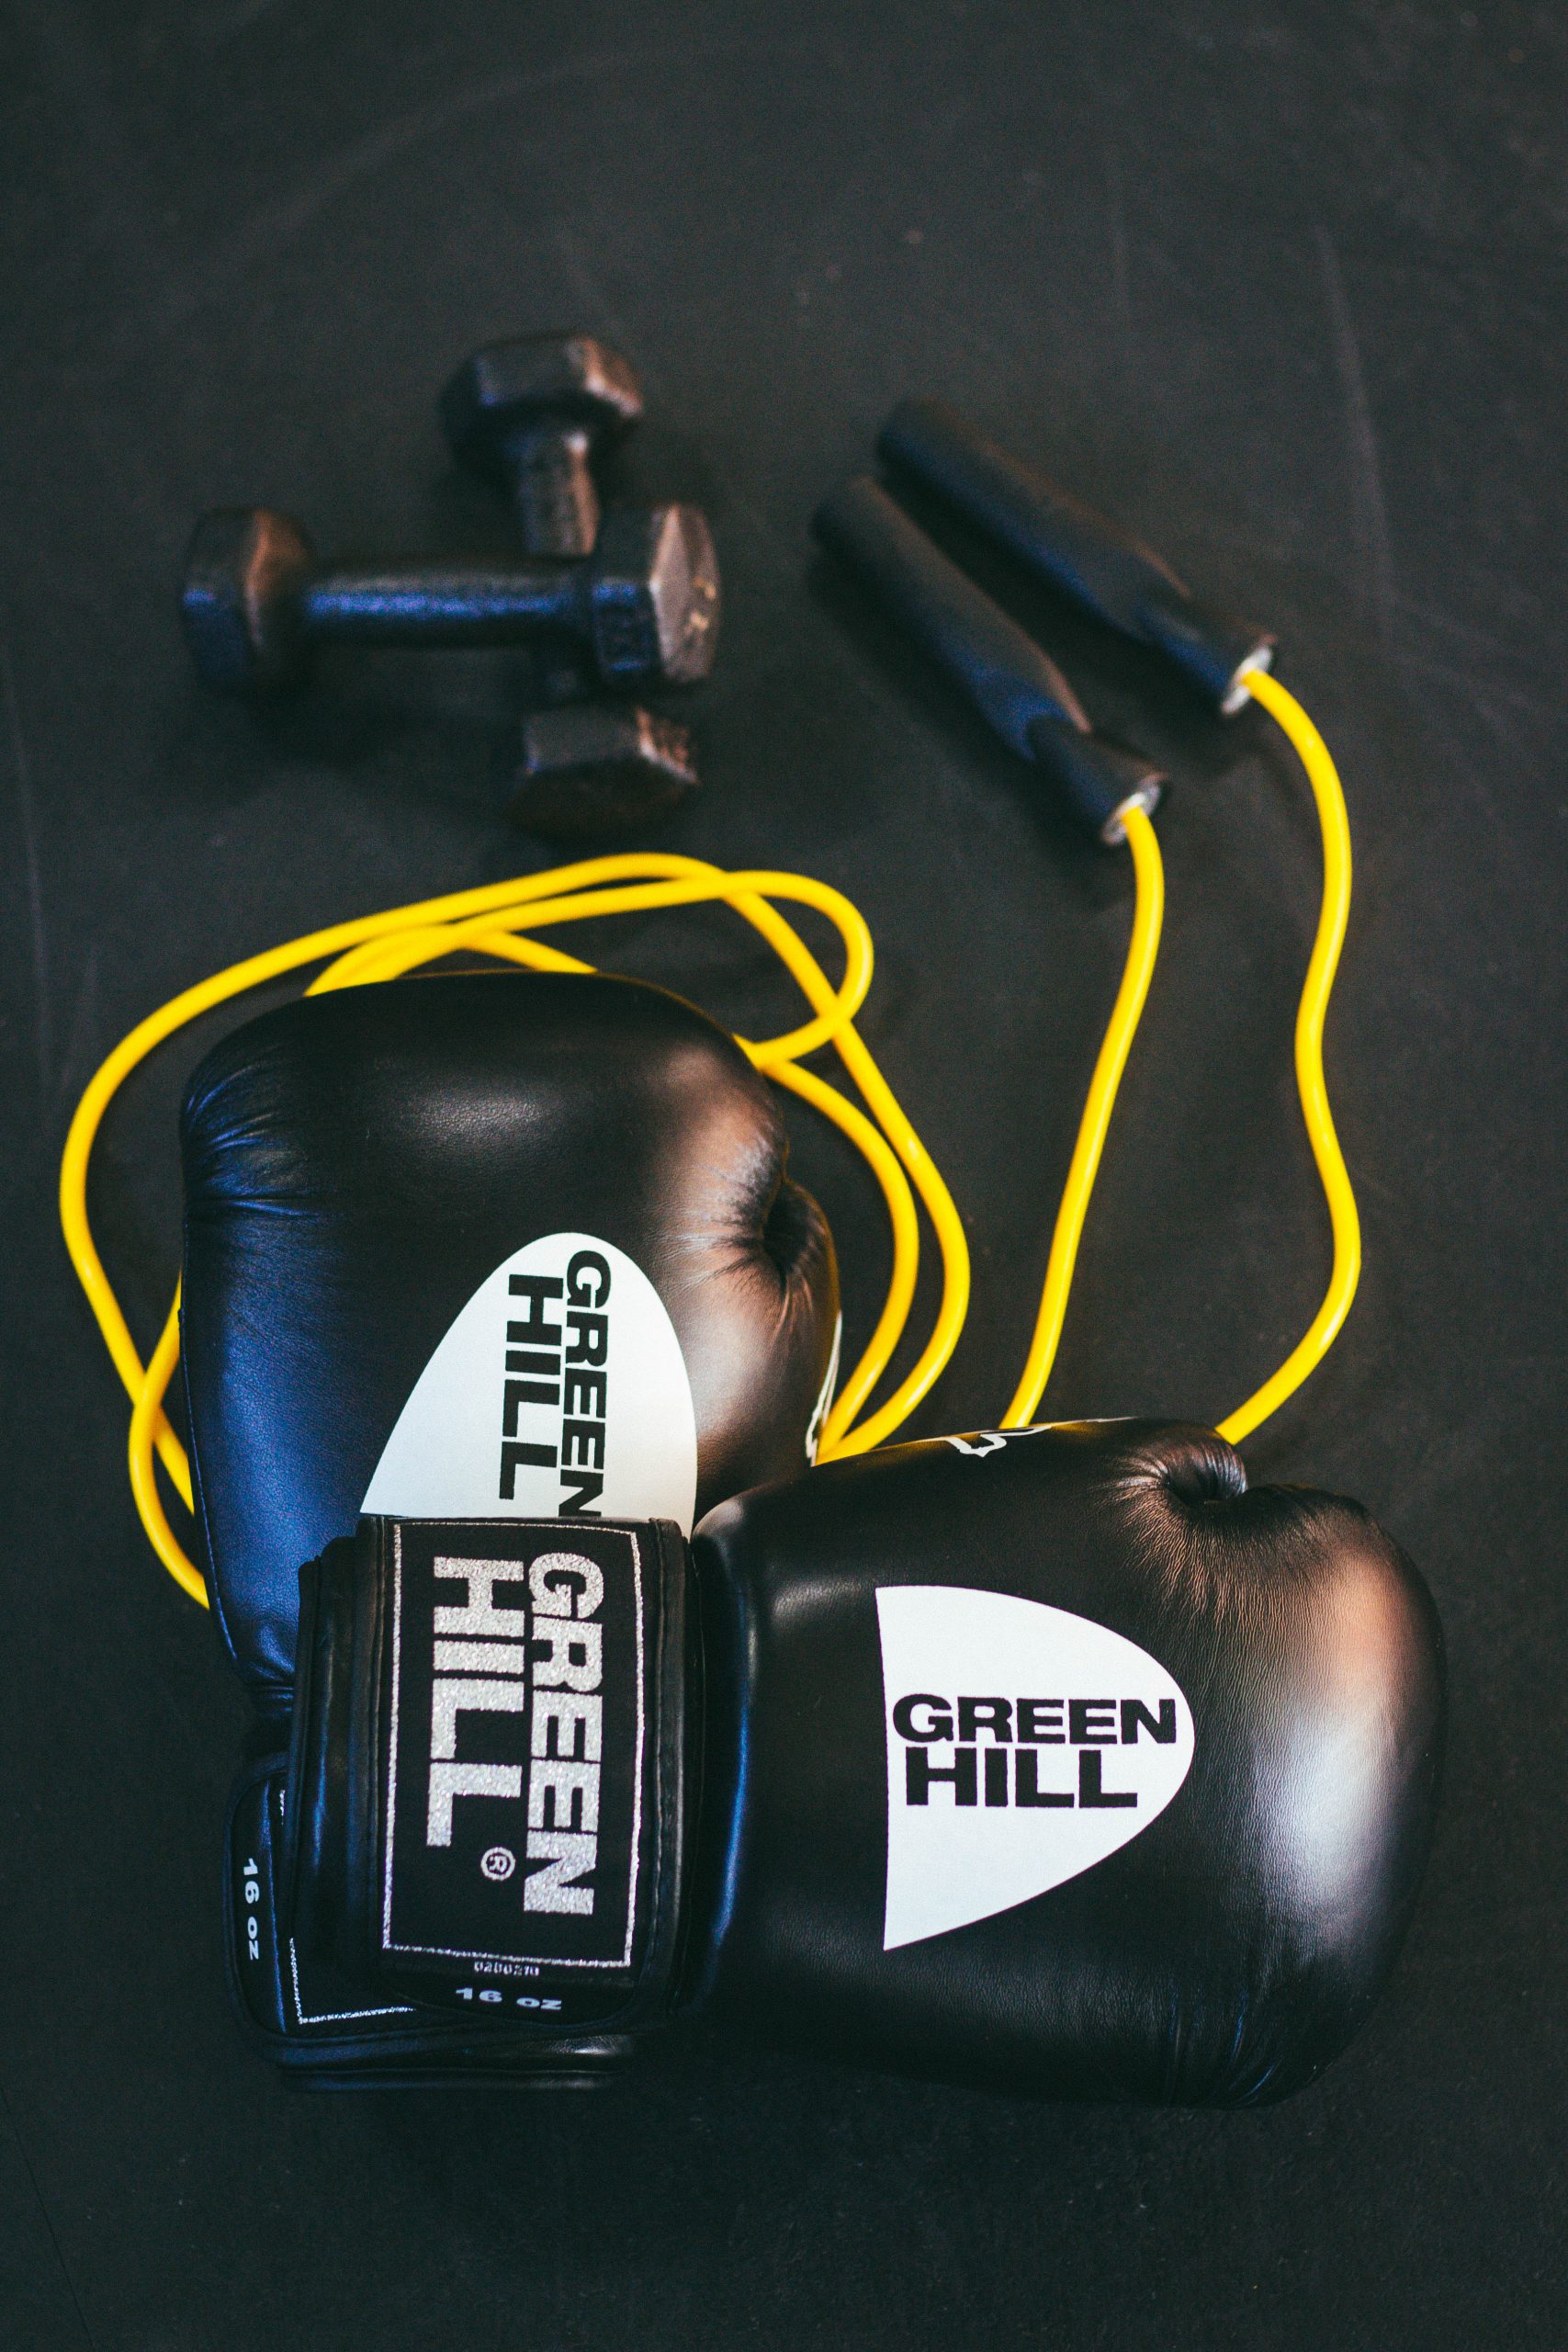 Boxing Training Lab – Aprenda Boxe através de uma metodologia